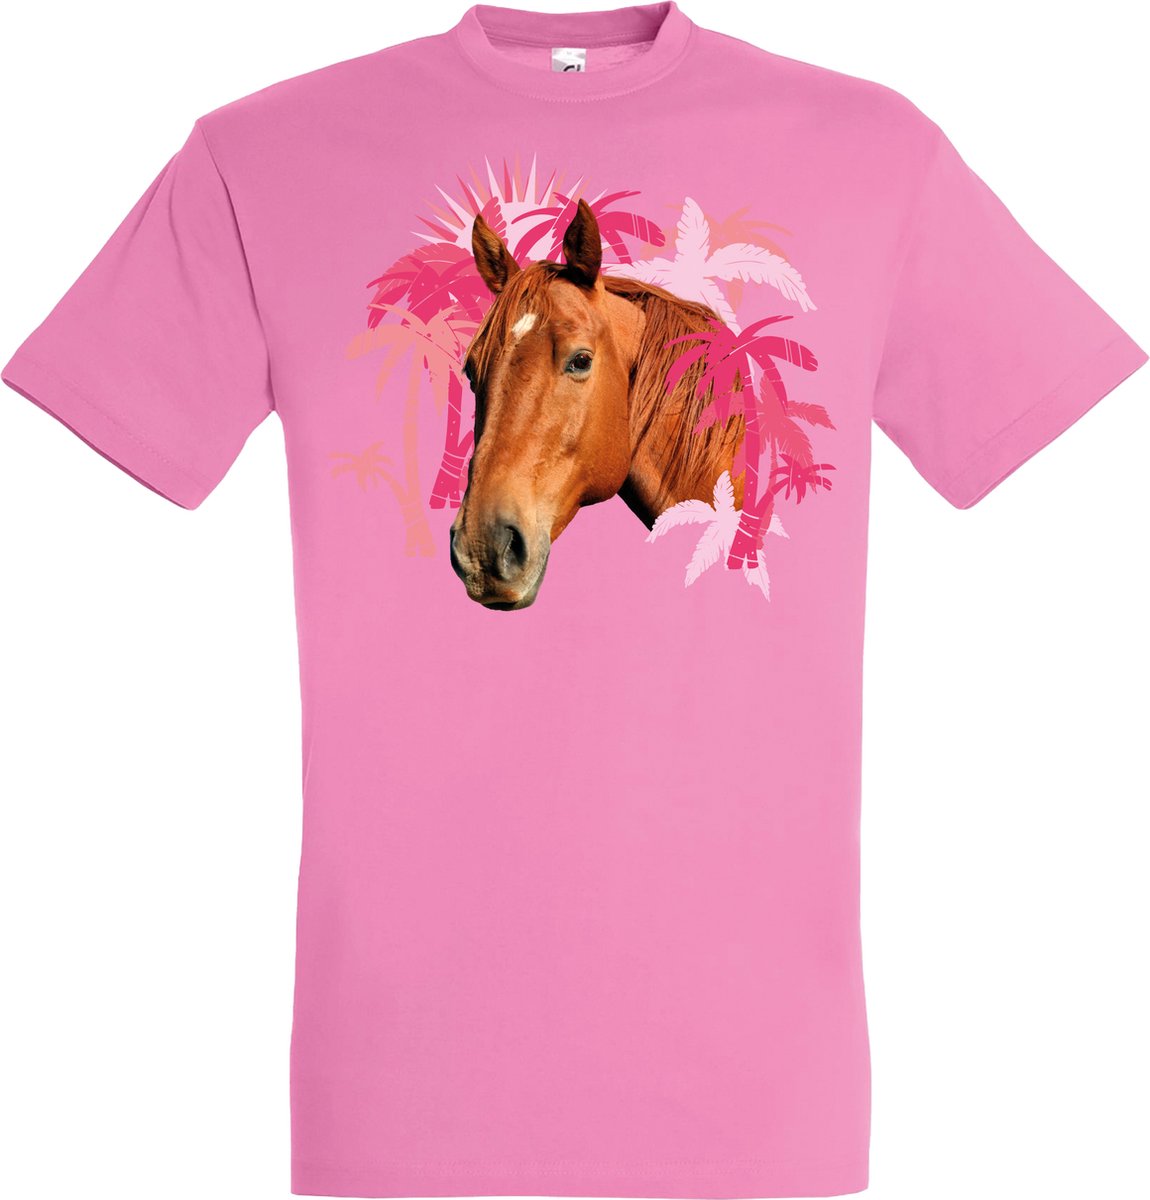 Plenty Gifts T-shirt Horses Orchid Pink M